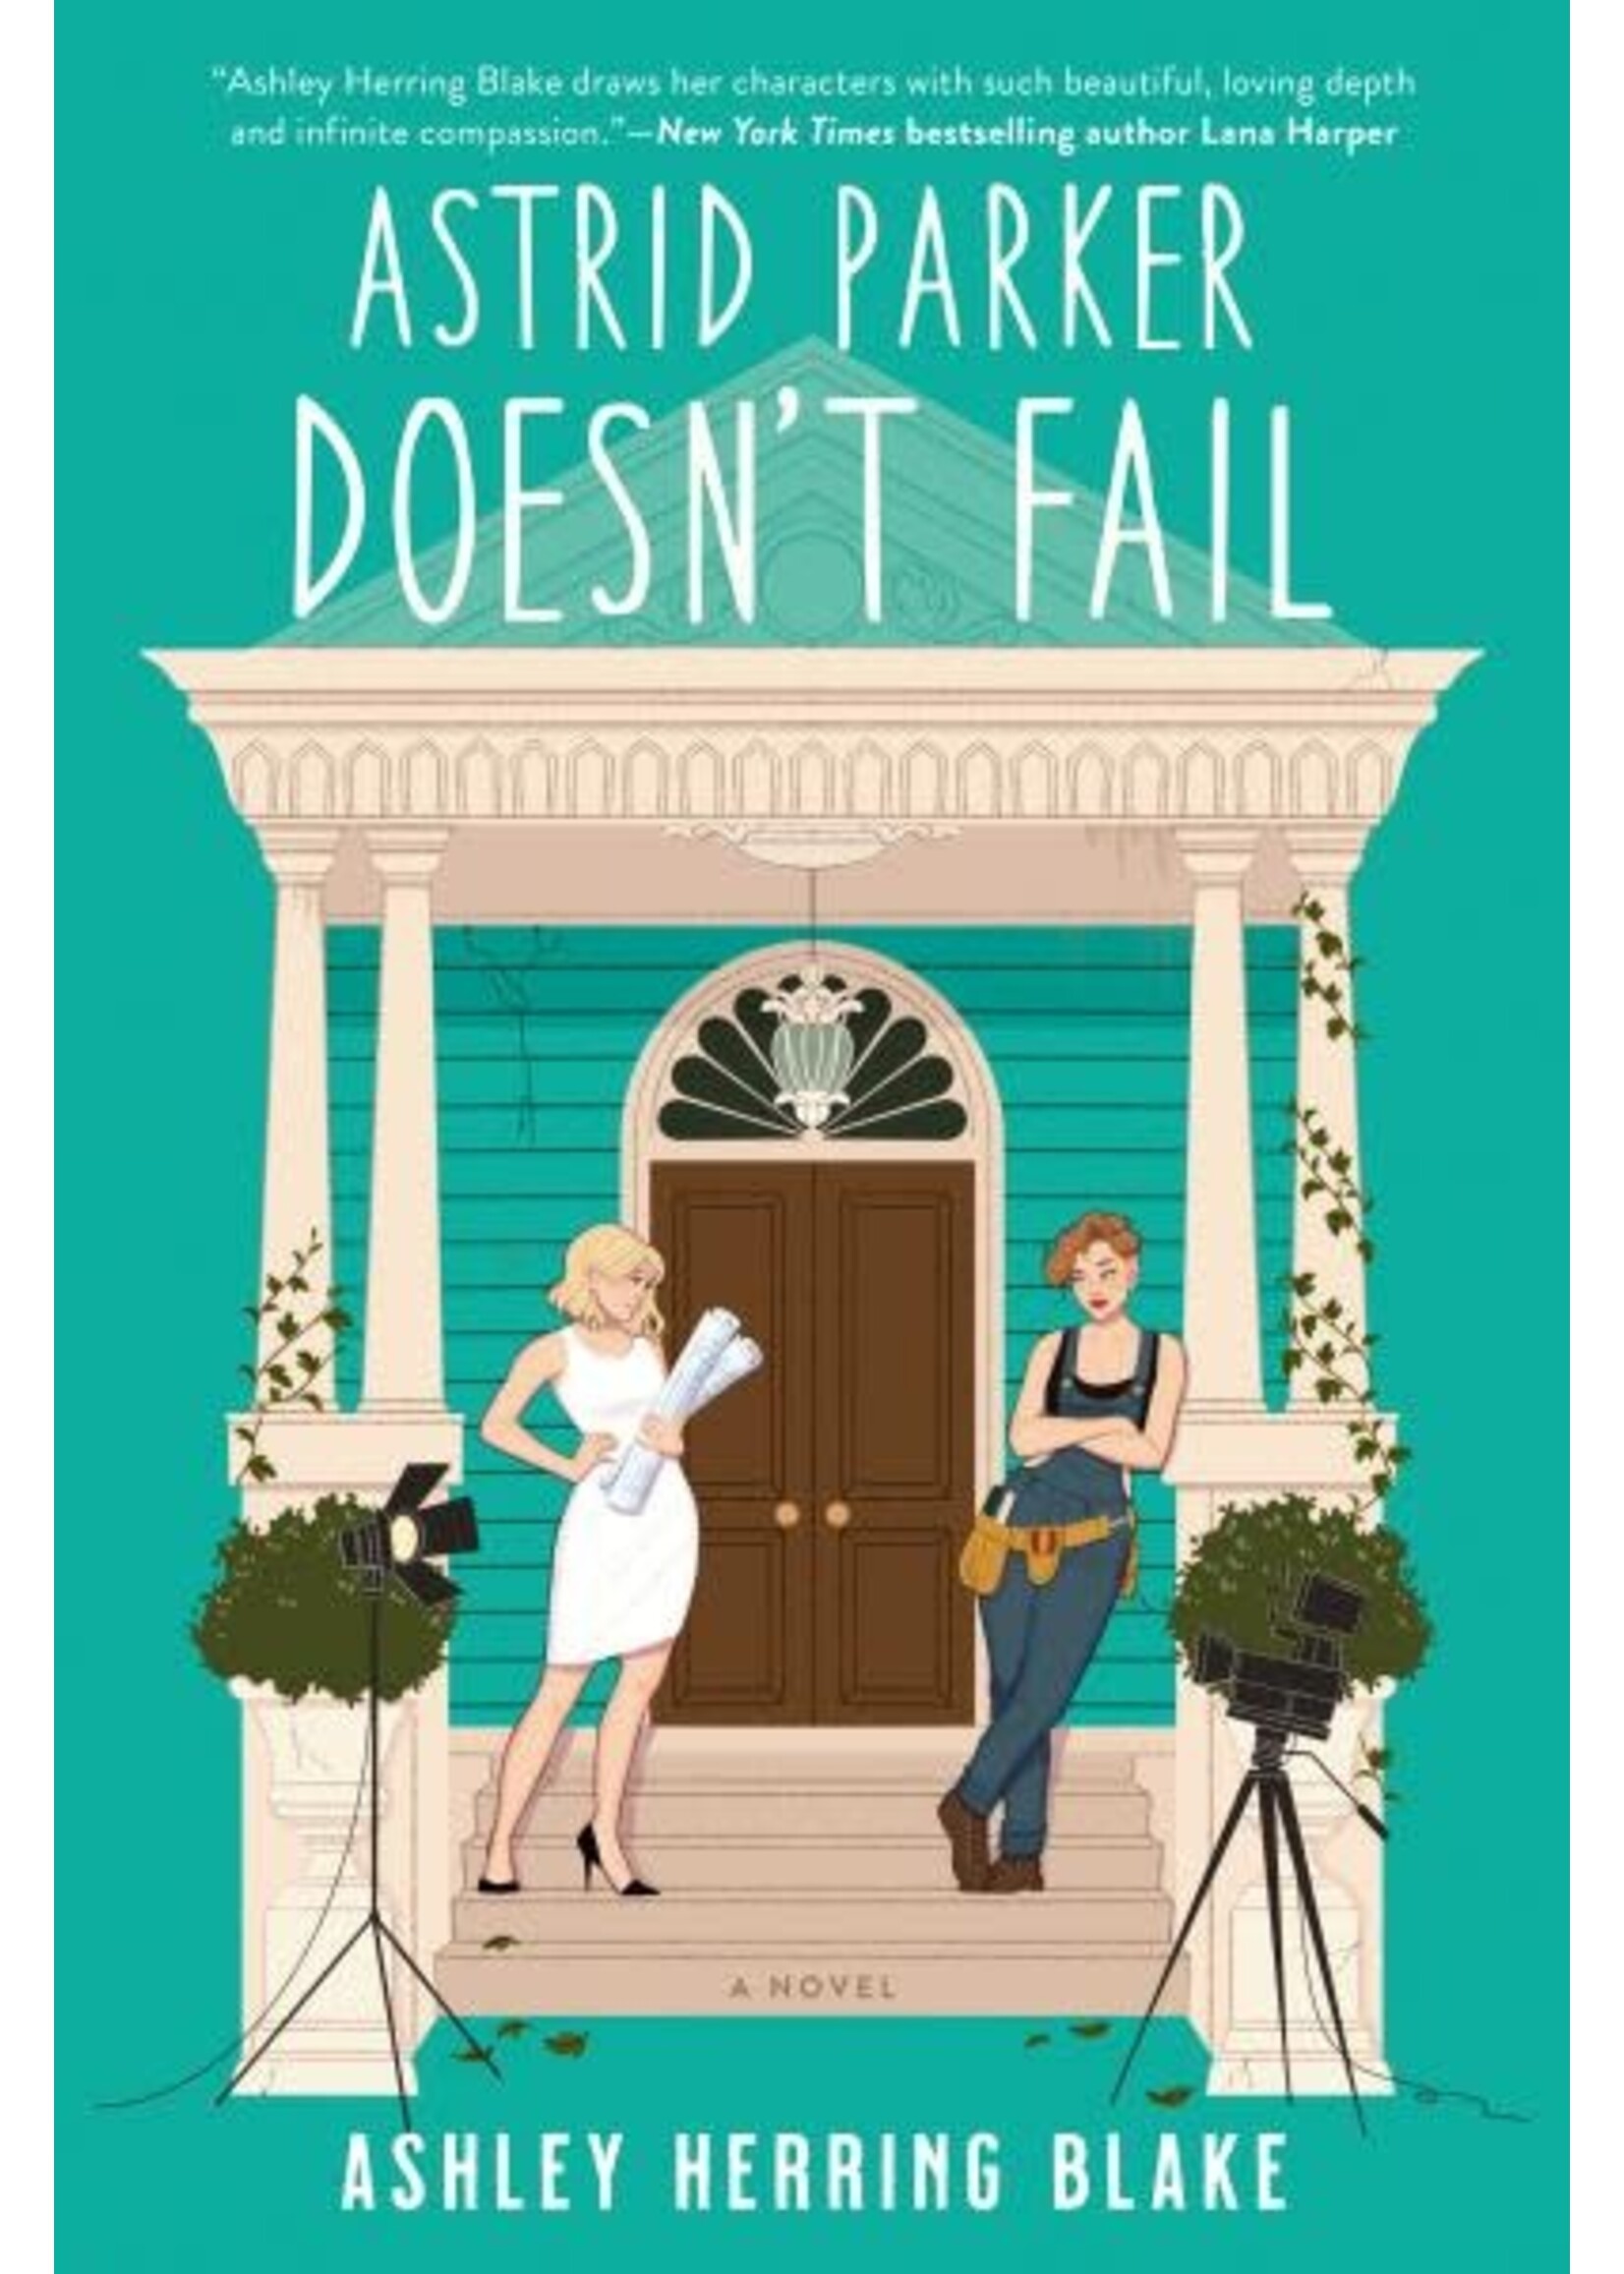 Astrid Parker Doesn't Fail (Bright Falls #2) by Ashley Herring Blake